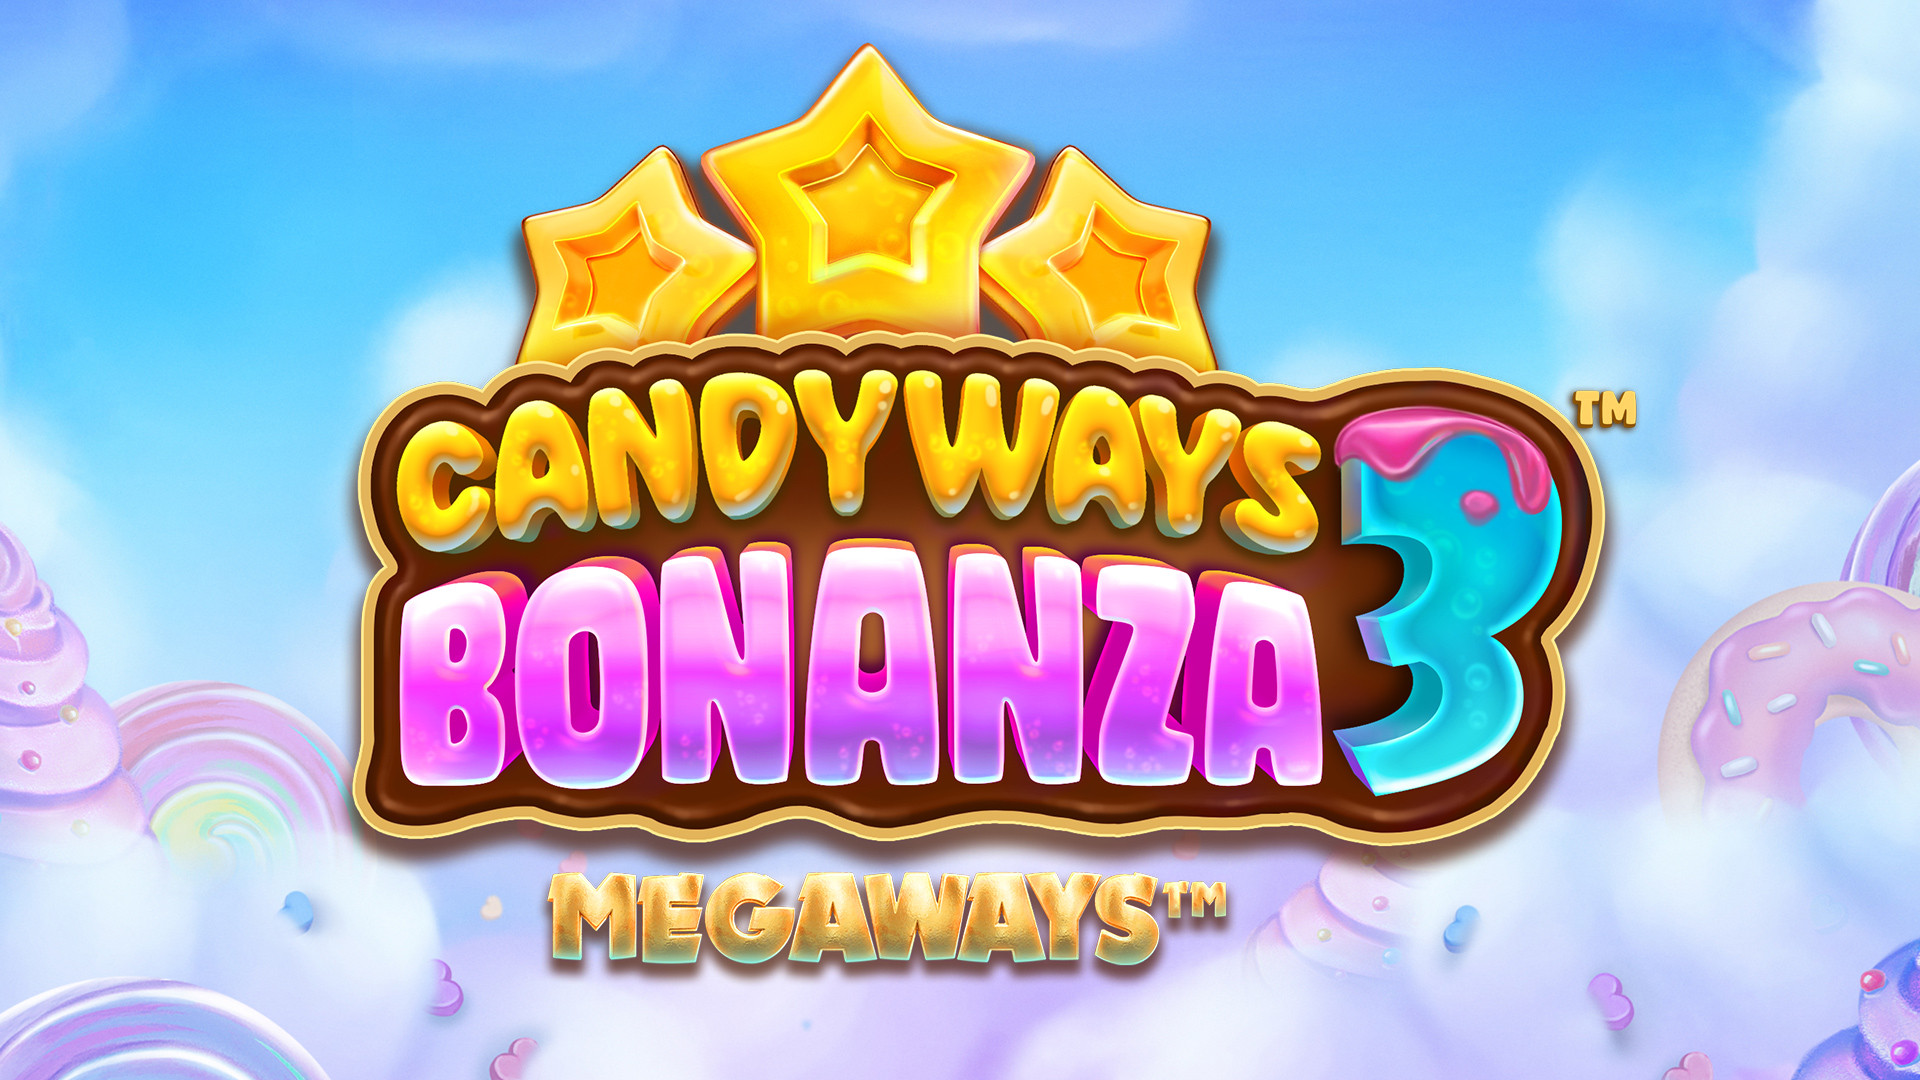 Candyways Bonanza 3 MEGAWAYS